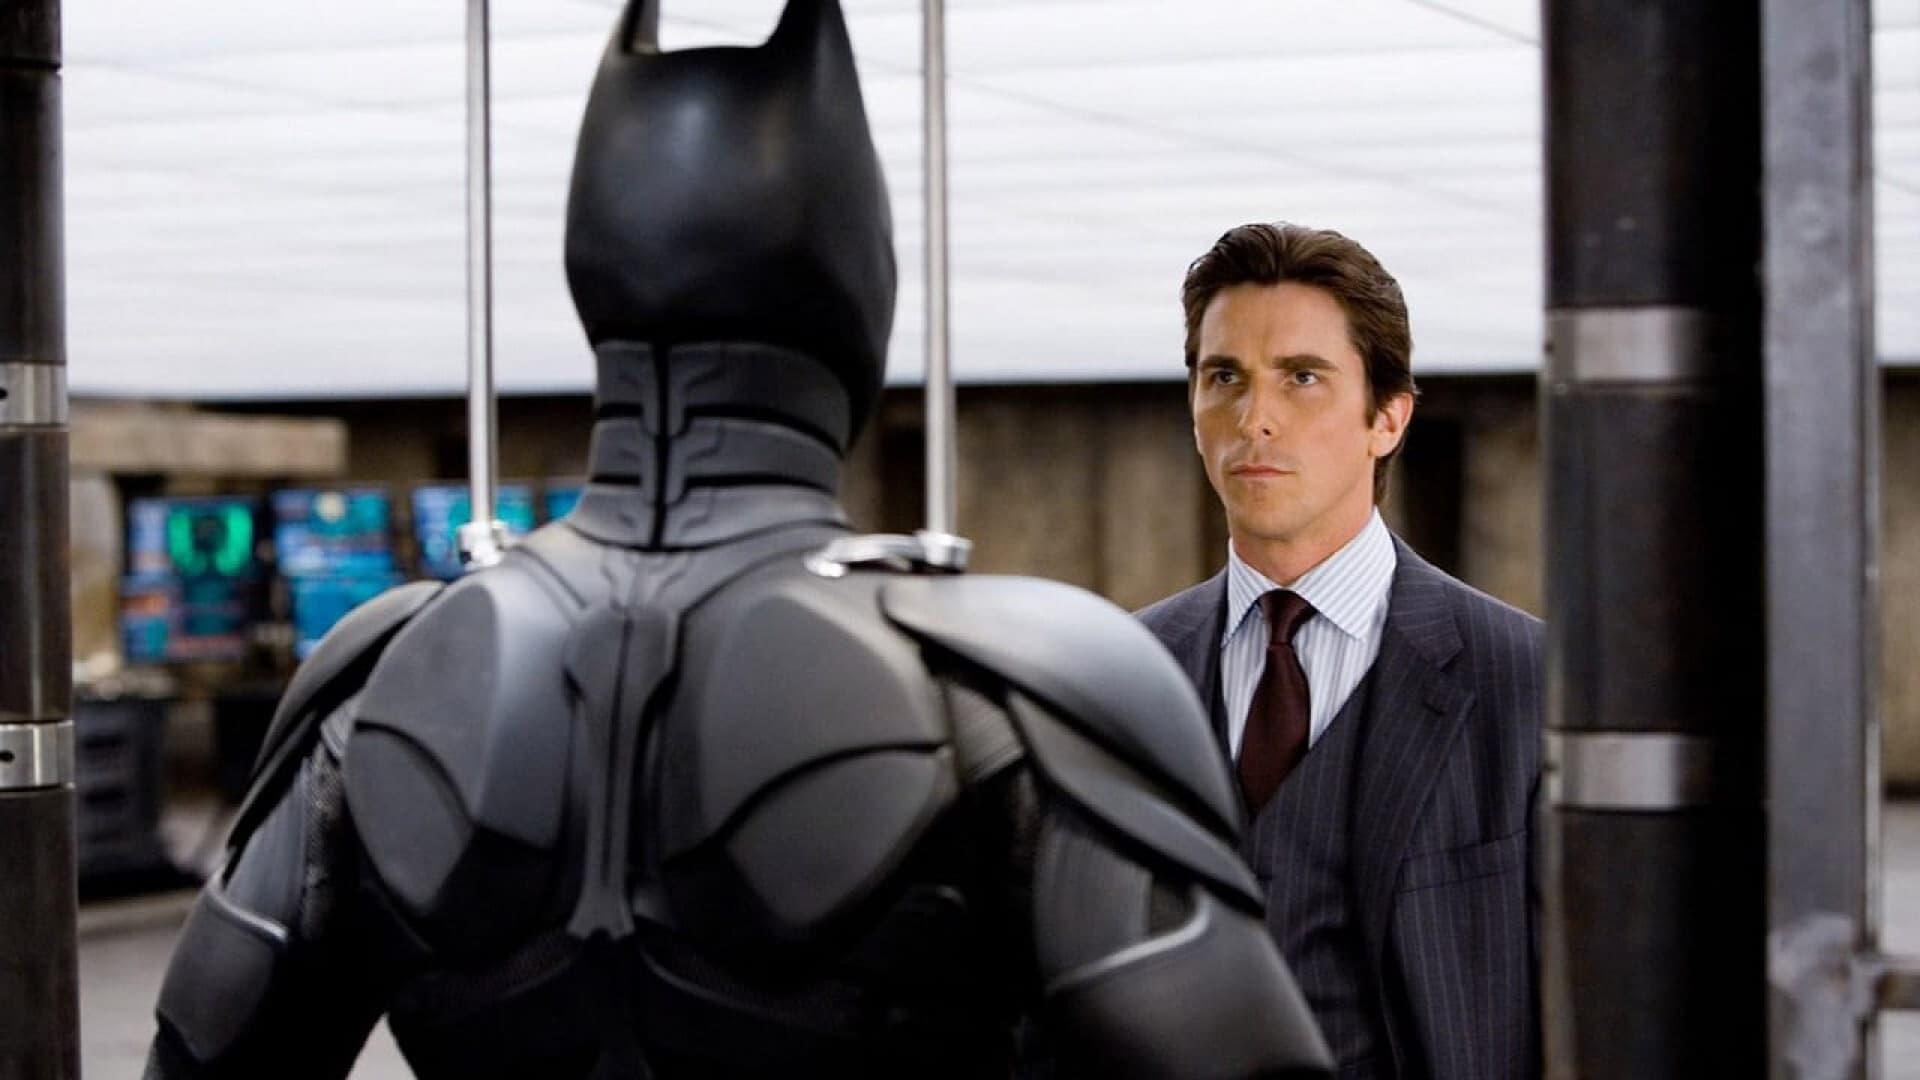 Batman Unmasked: The Psychology of 'The Dark Knight' backdrop